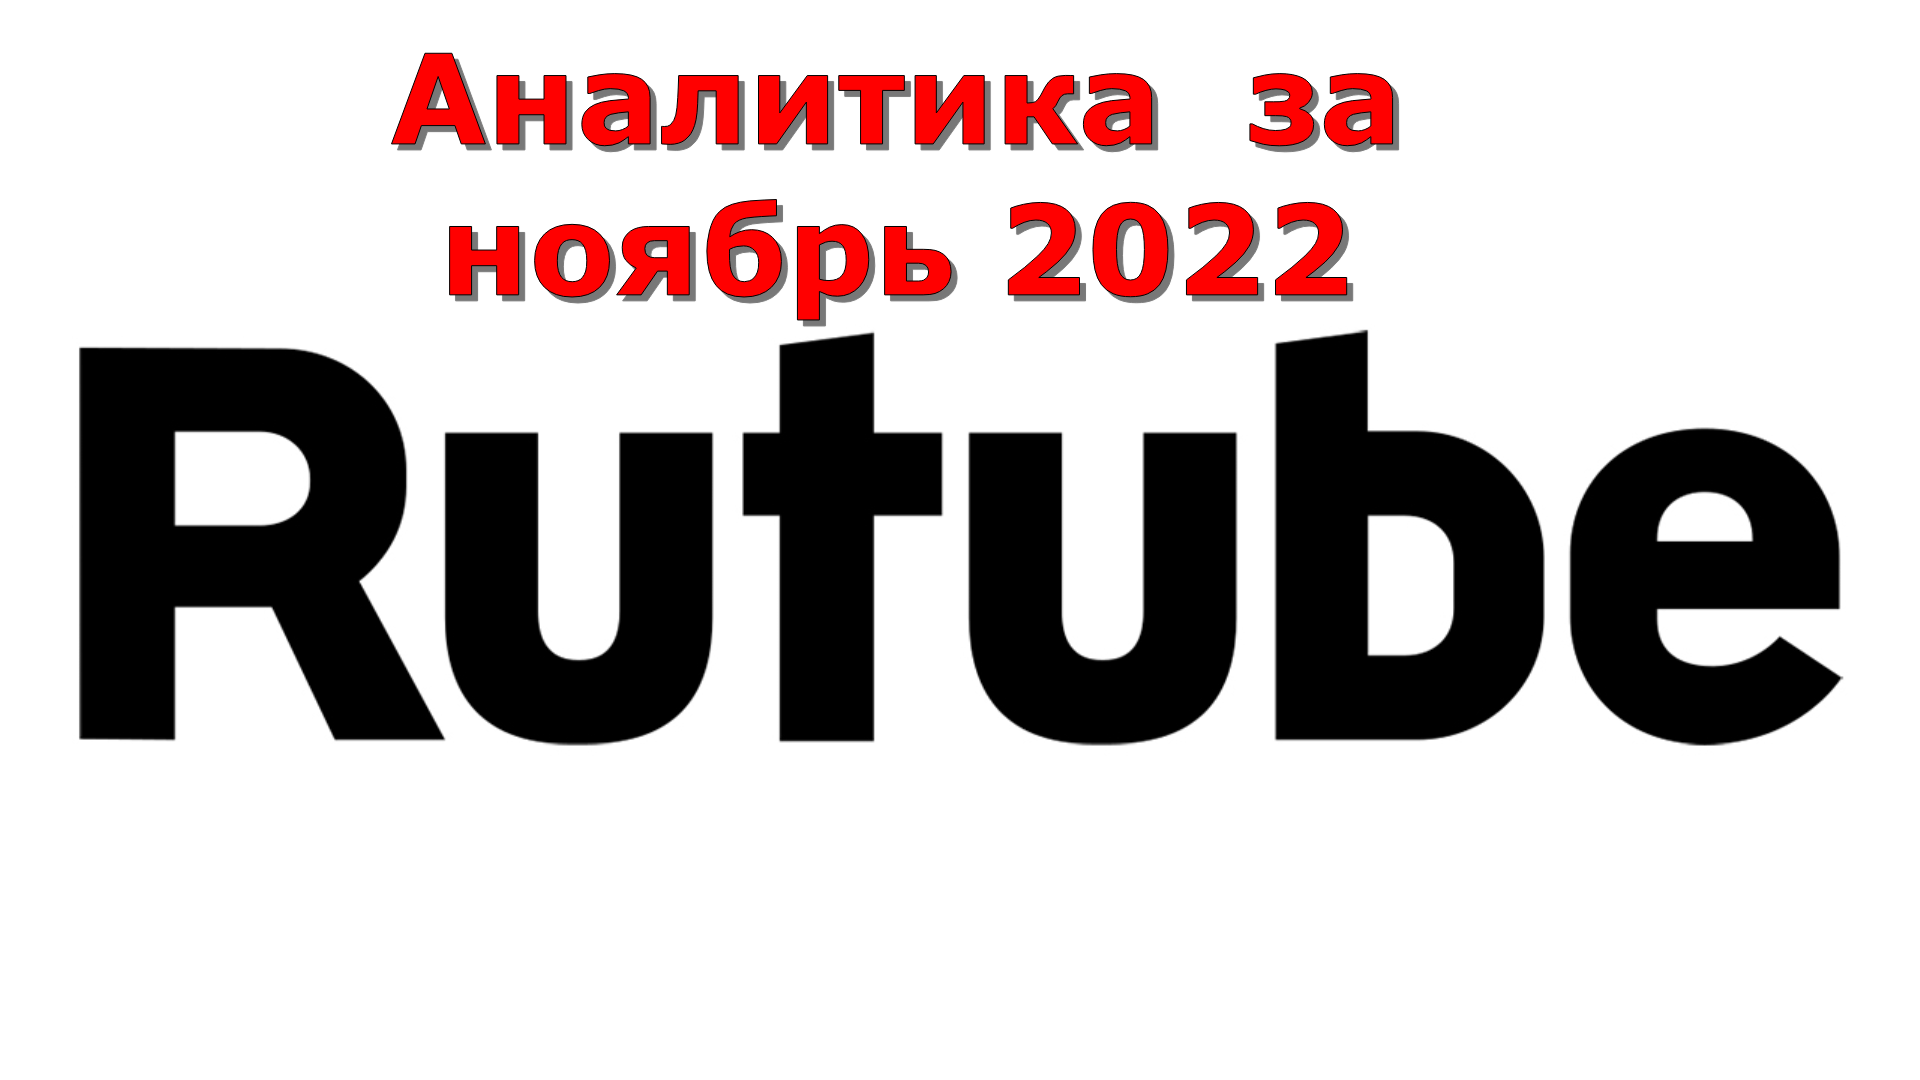 Аналитика RUTUBE за ноябрь 2022